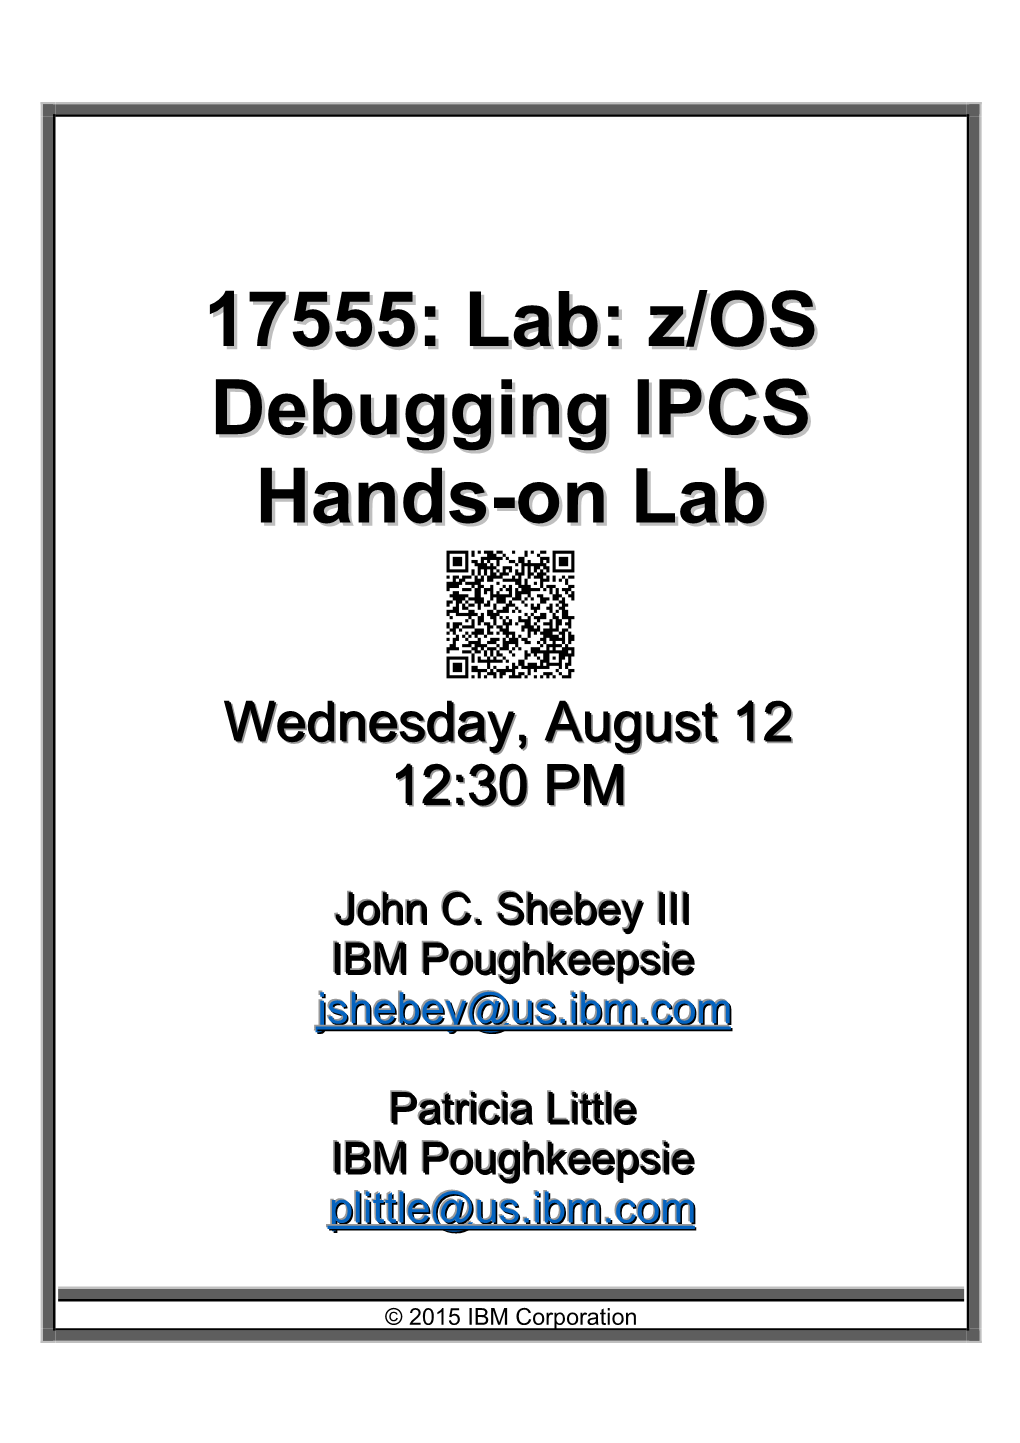 17555: Lab: Z/OS Debugging IPCS Hands-On